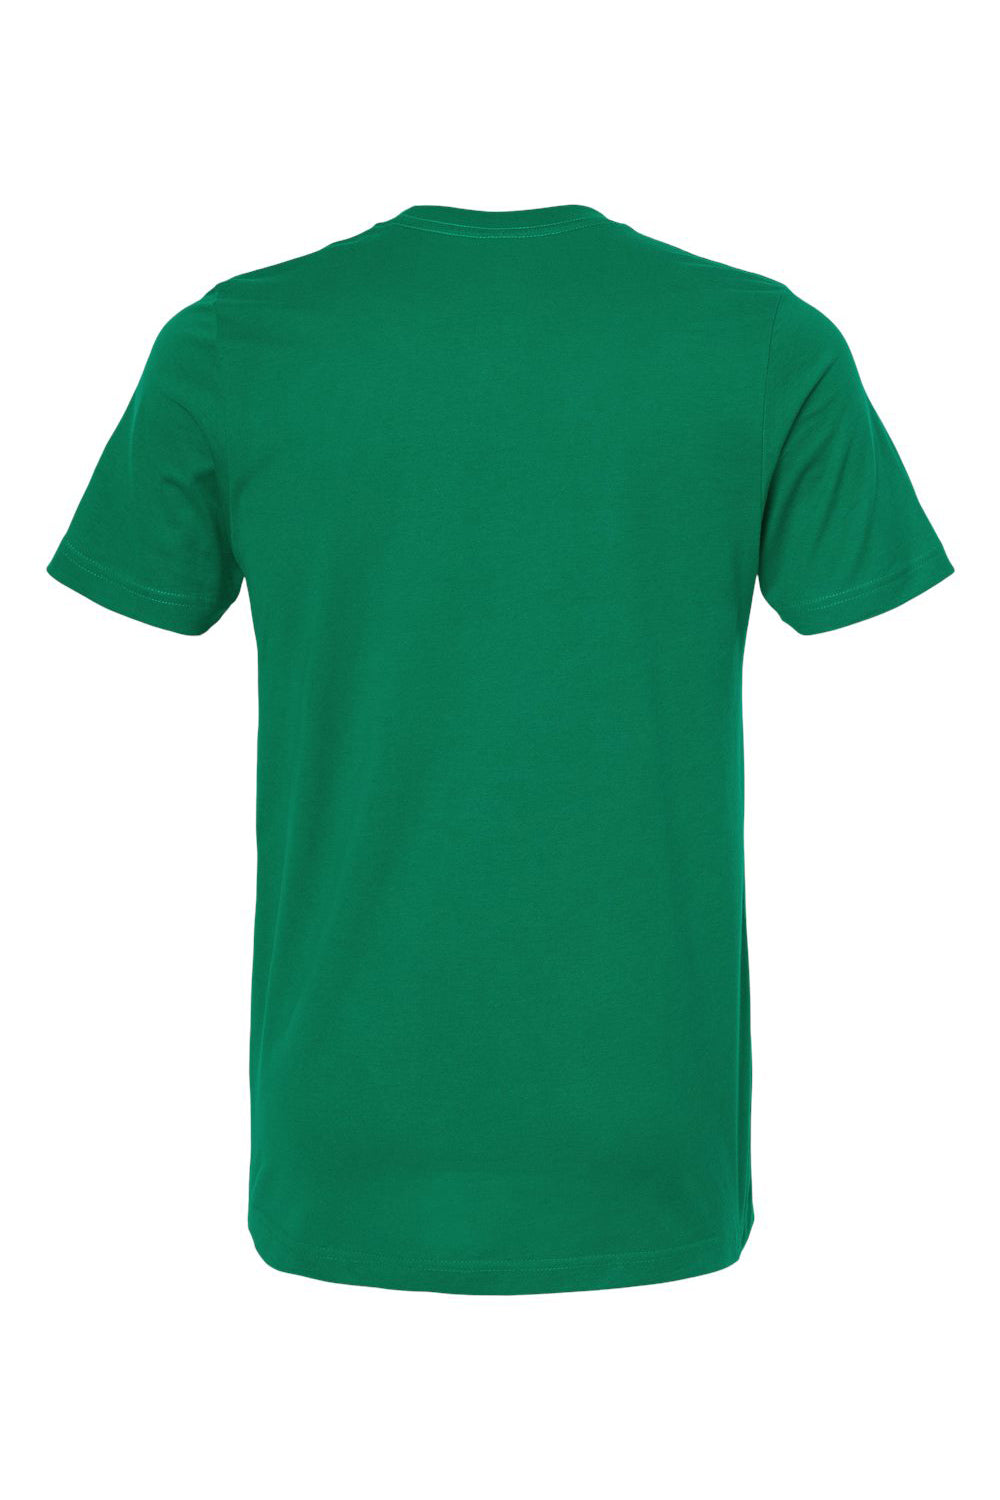 Tultex 602 Mens Short Sleeve Crewneck T-Shirt Kelly Green Flat Back